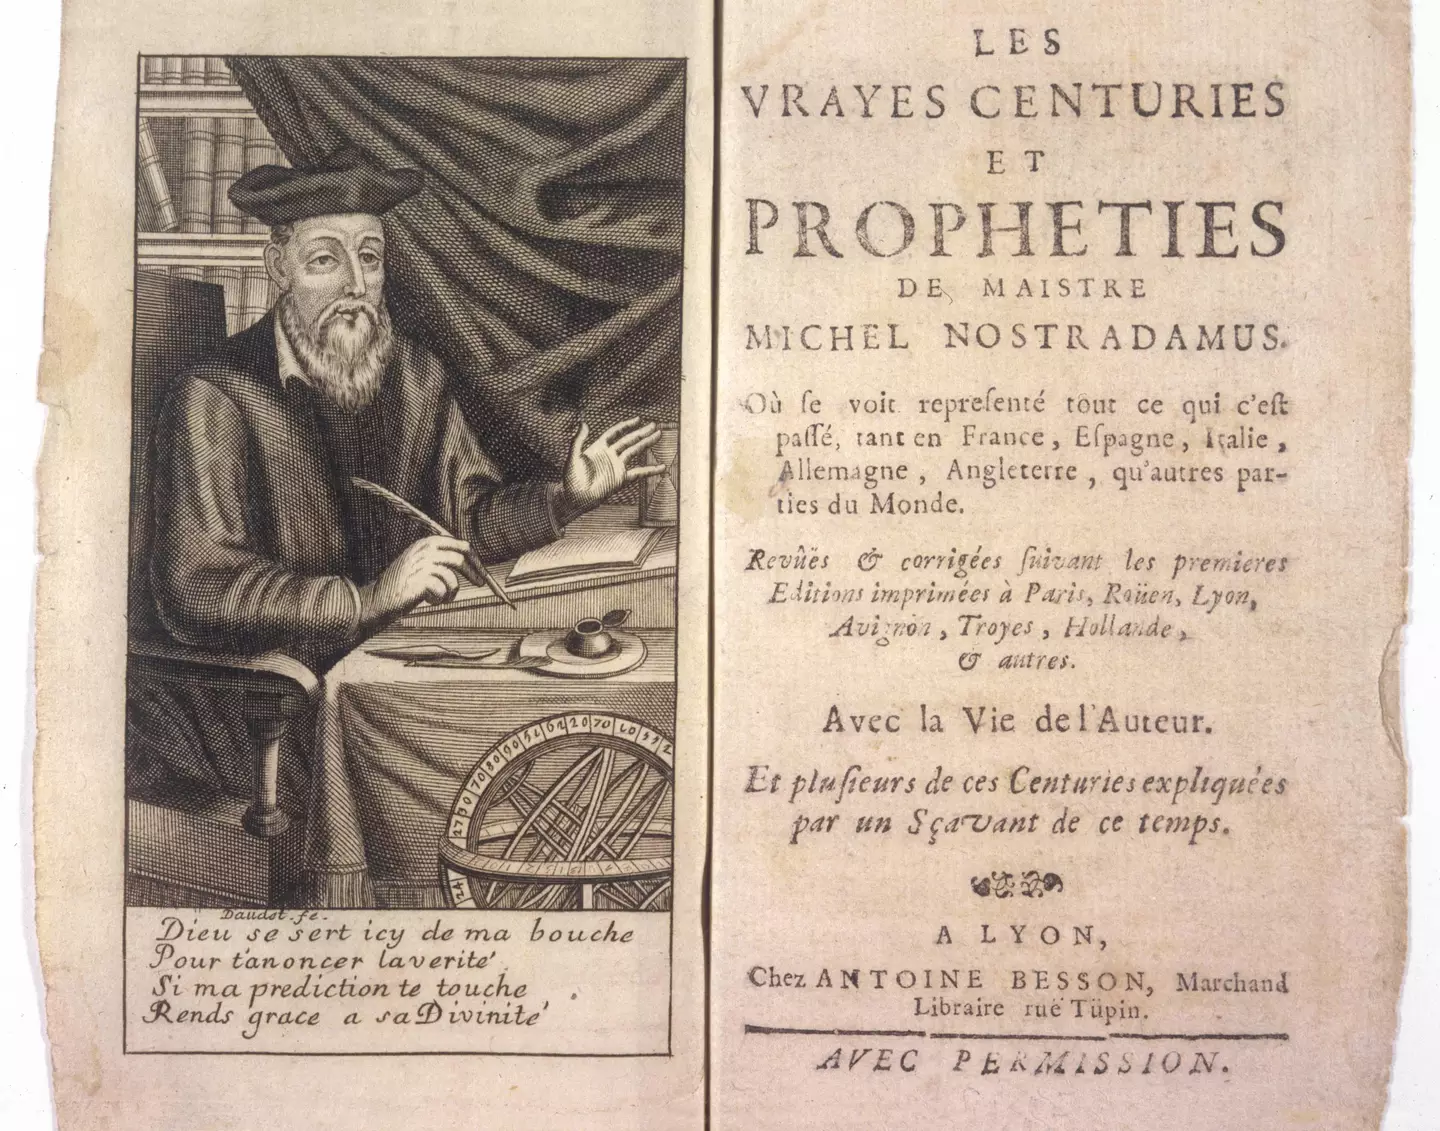 Nostradamus predicted conflict in France in 2023.